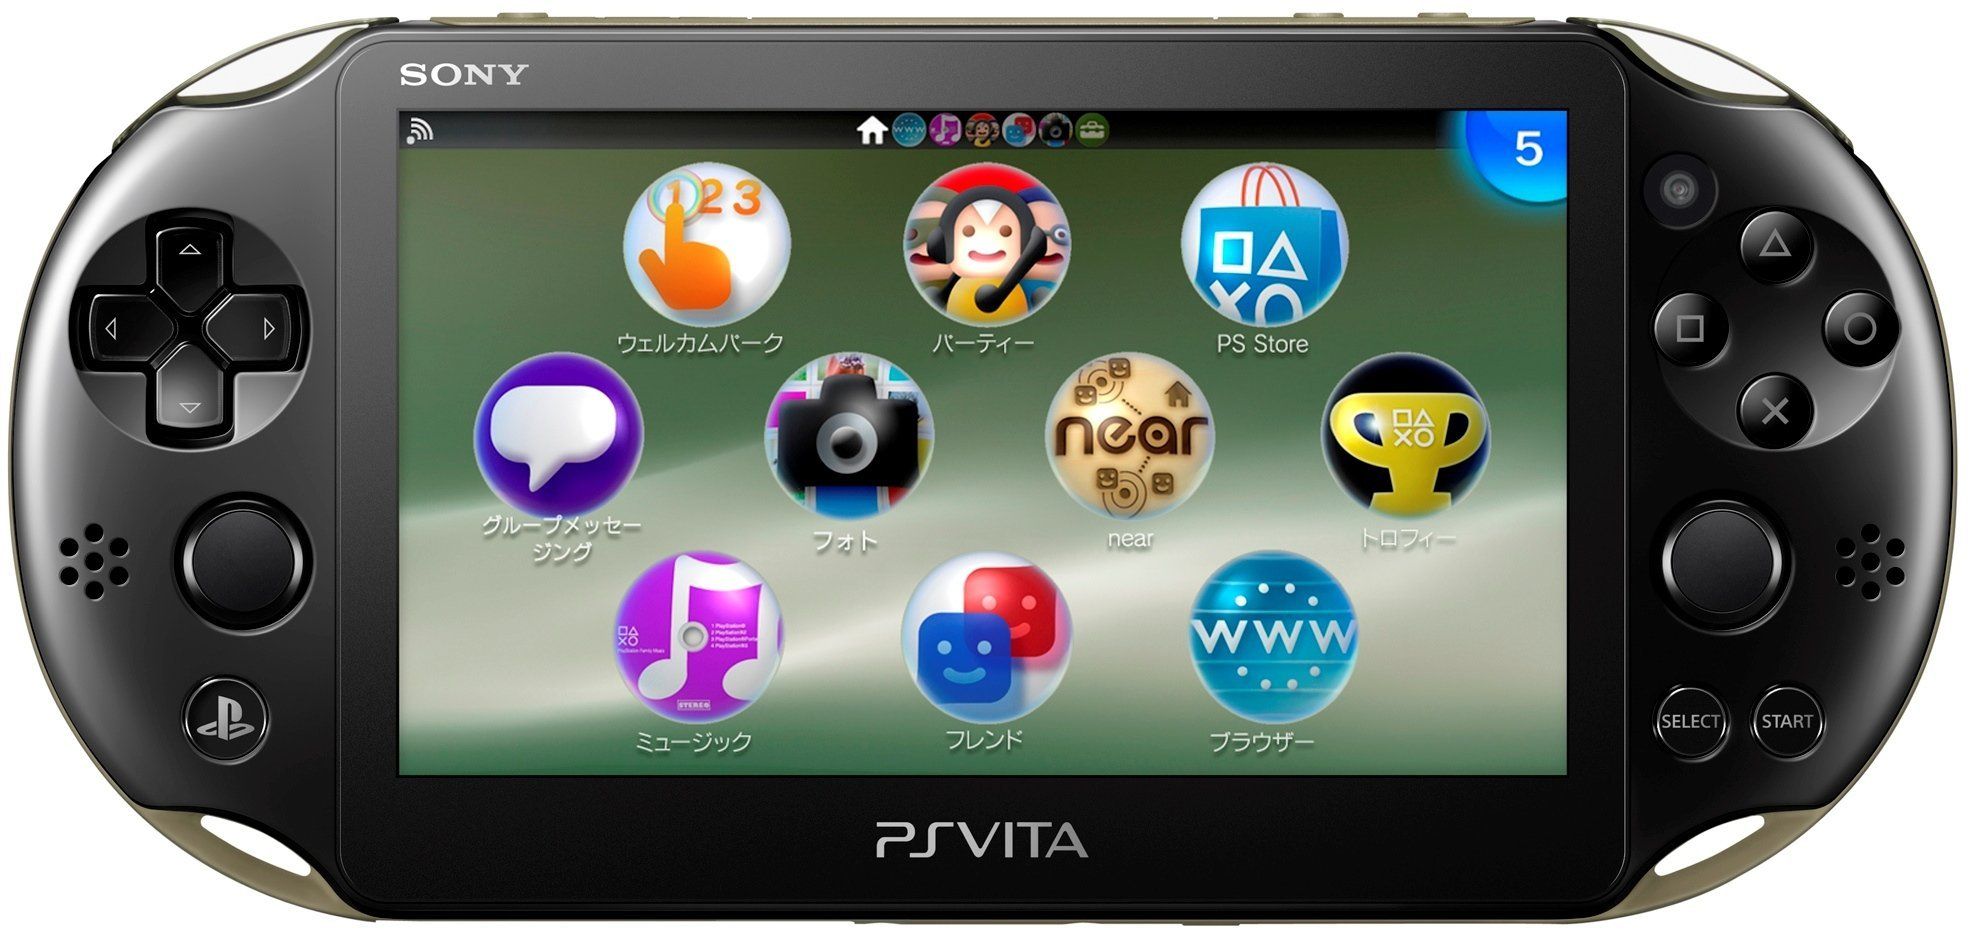  PS Vita 2000 - WiFi - Full Crack cài sẵn game các hệ PsVita/PSP/PS1/GBA/NES/NEOGEO... 